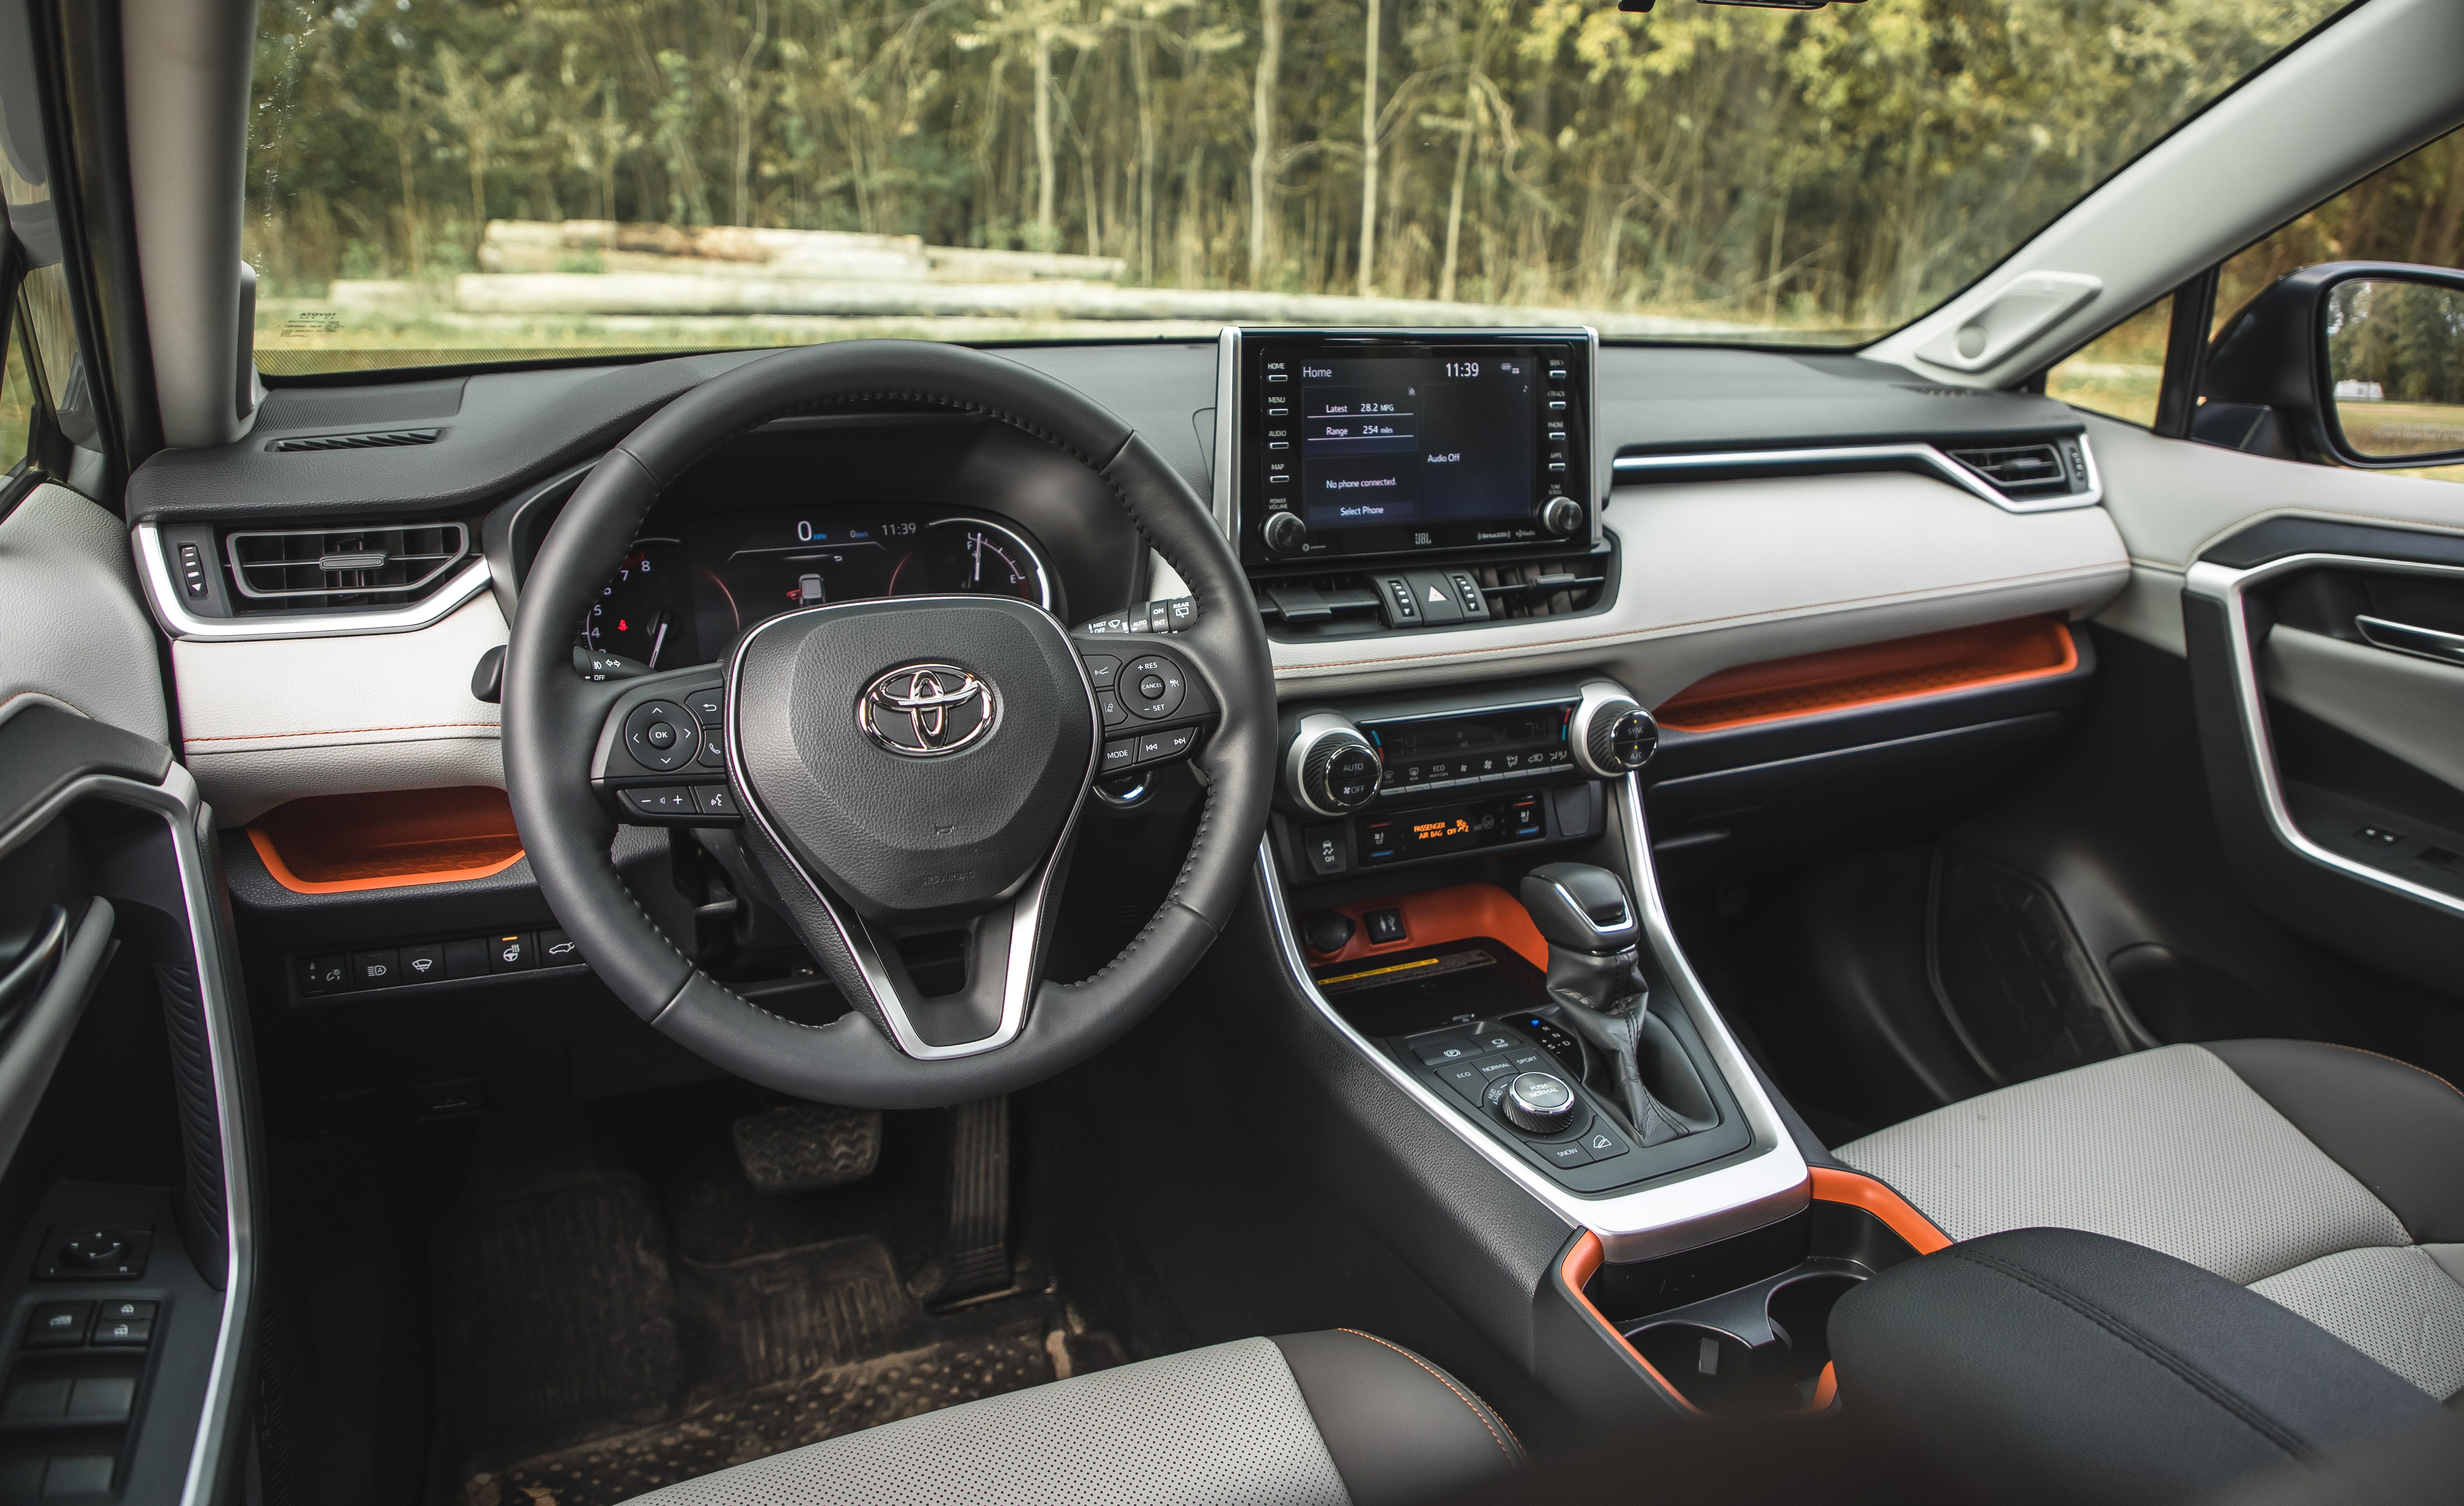 2019 Toyota Rav4 Compact Suv Has More